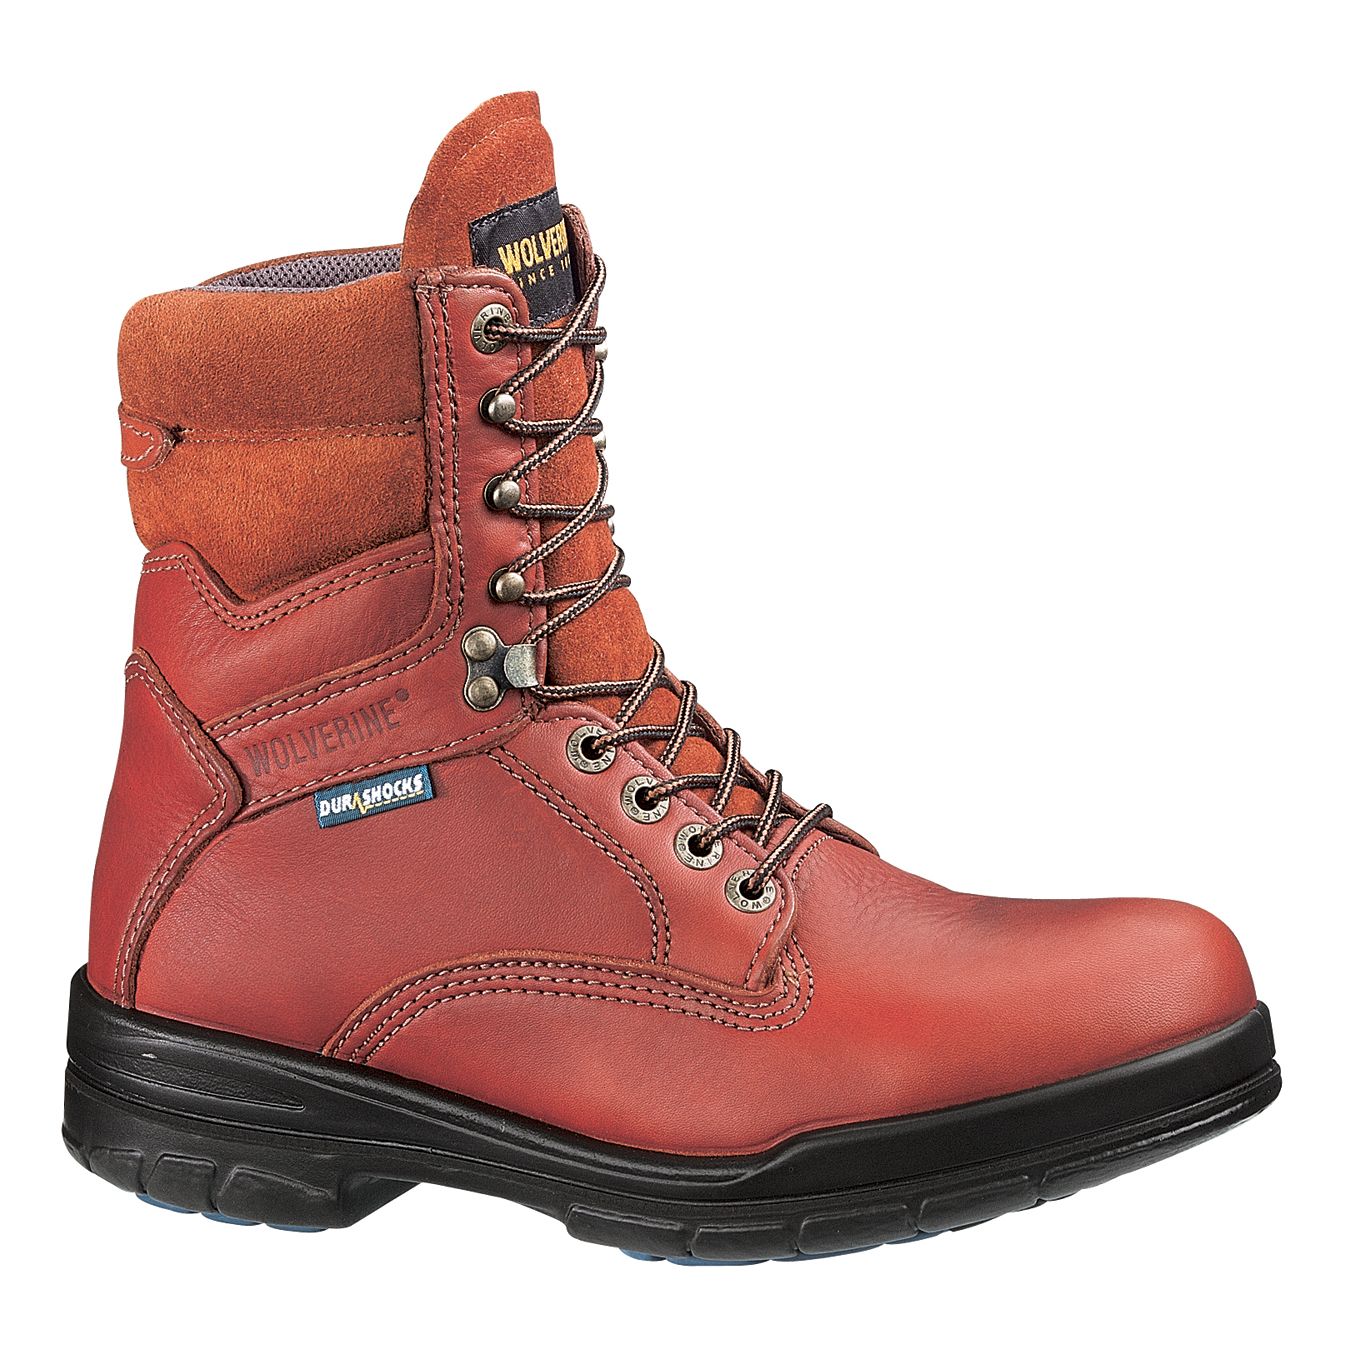 Men's DuraShock Redwood Brown Leather Steel Toe Work Boot